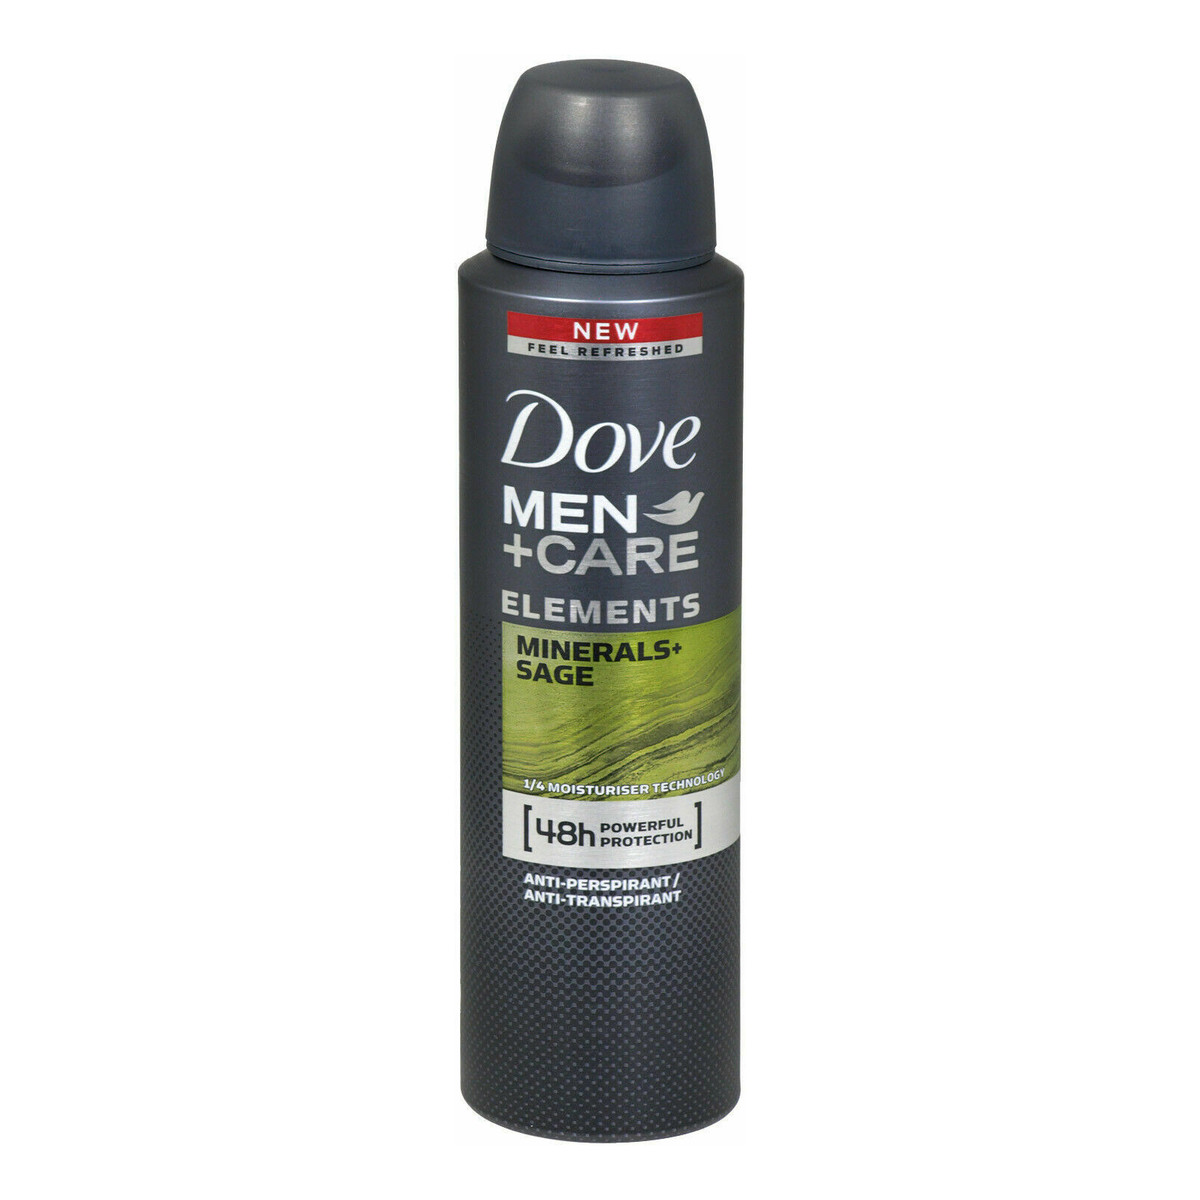 Dove Men+Care Elements Minerals+Sage antyperspirant spray 150ml